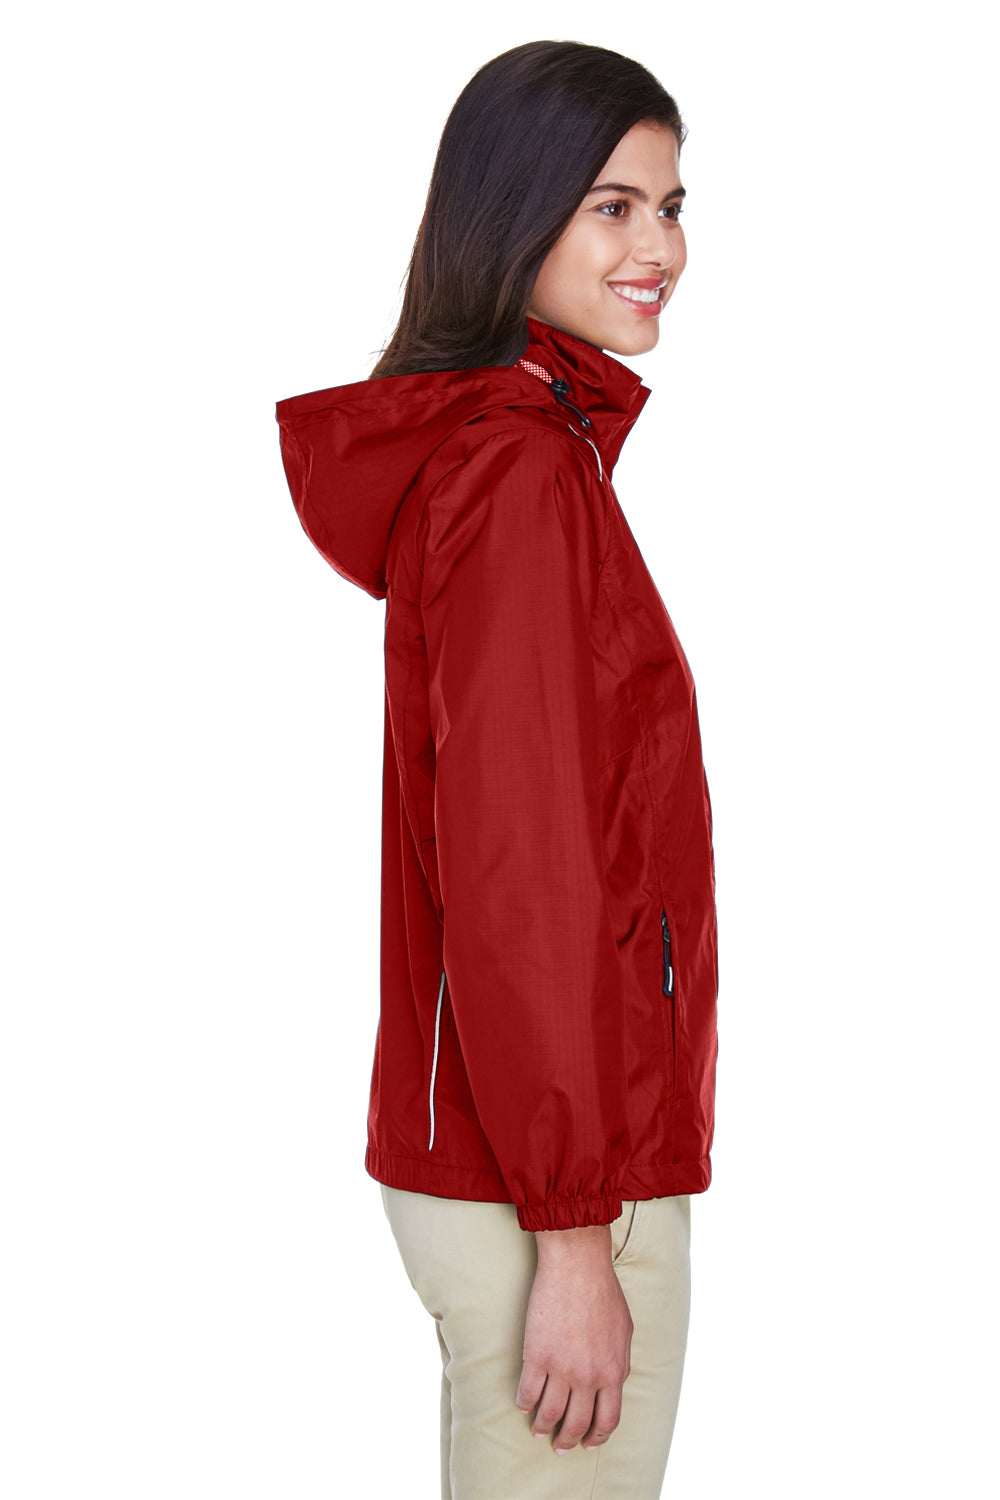 Core 365 78185 Womens Climate Waterproof Full Zip Hooded Jacket Red Side